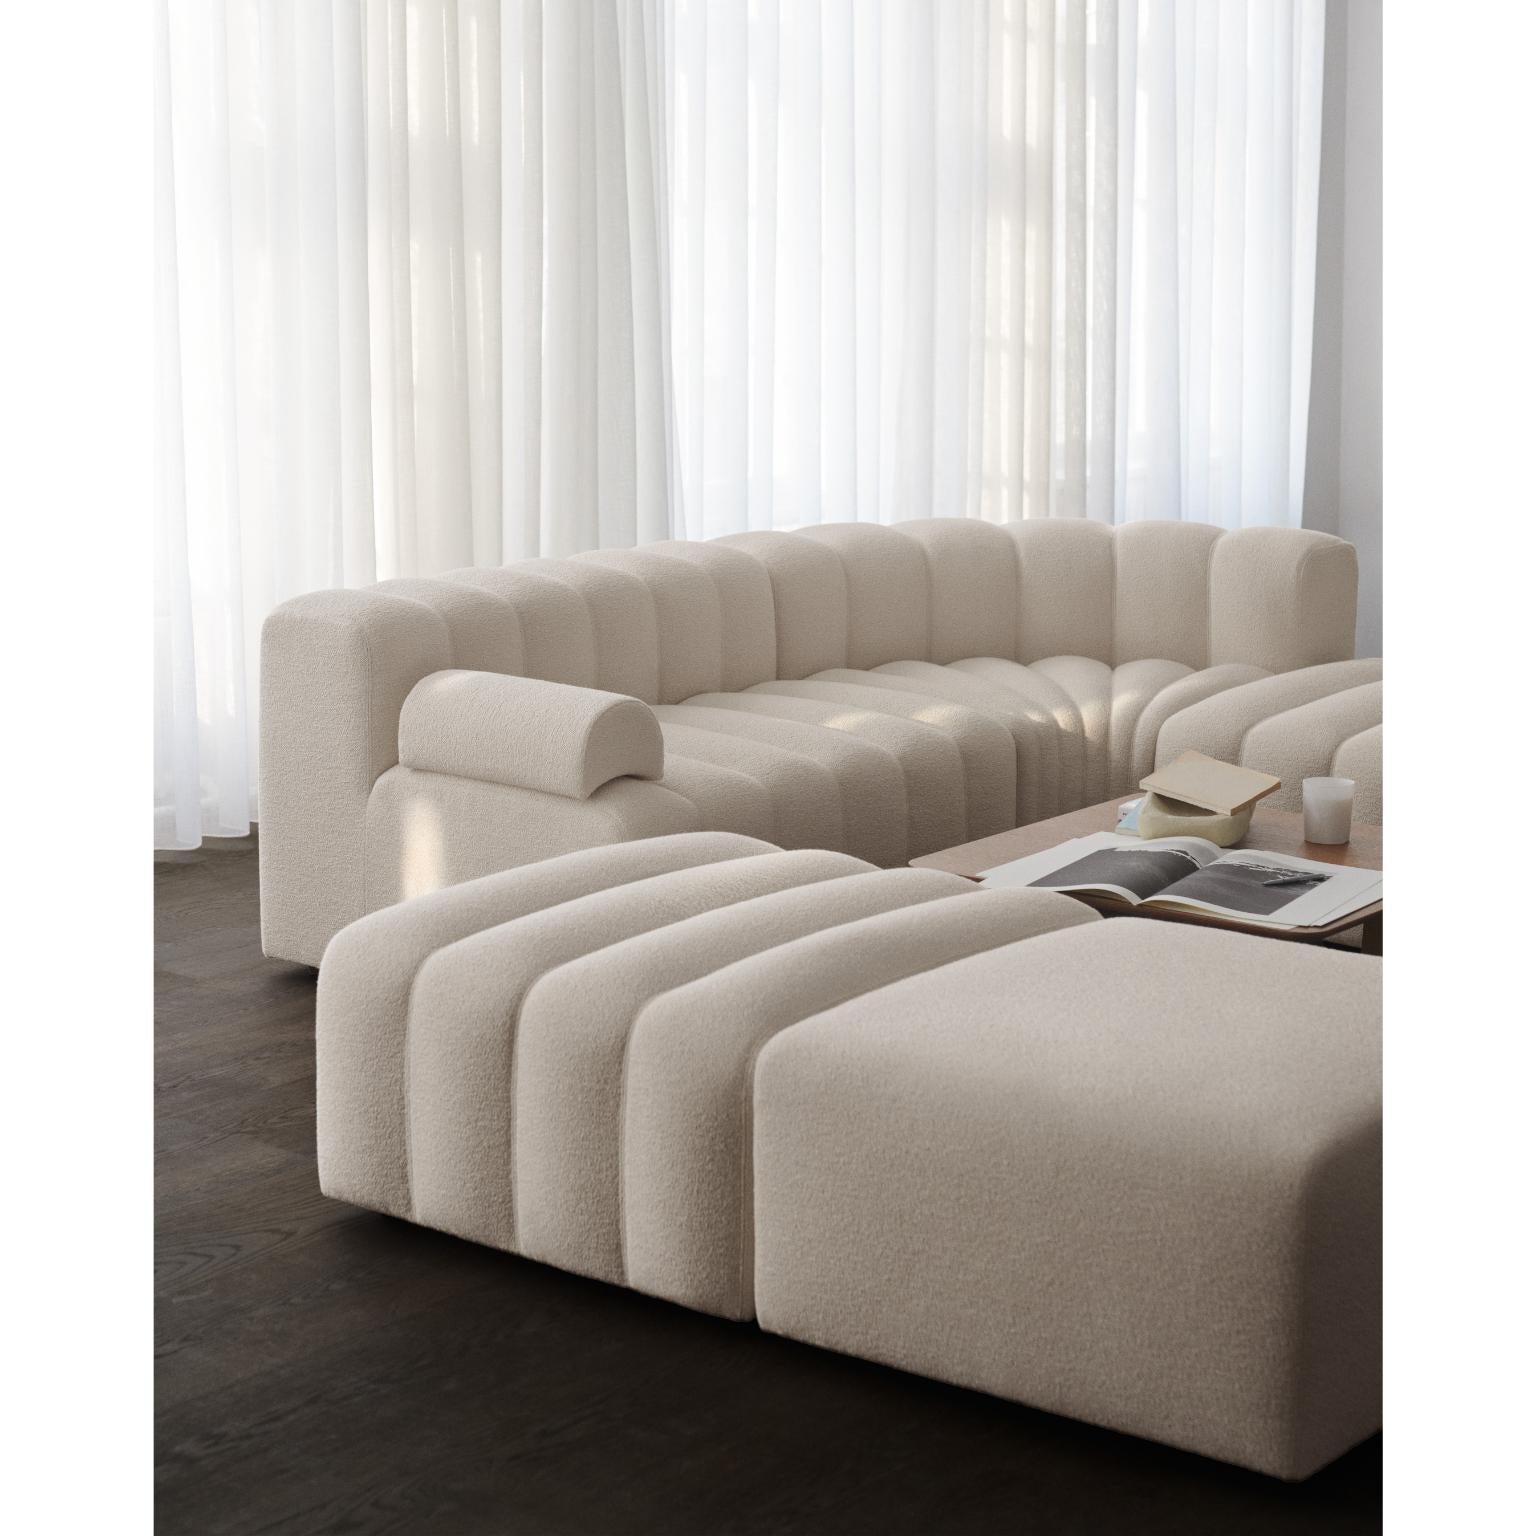 Other Studio Lounge Medium Left Modular Sofa With Short Armrest by NORR11 For Sale